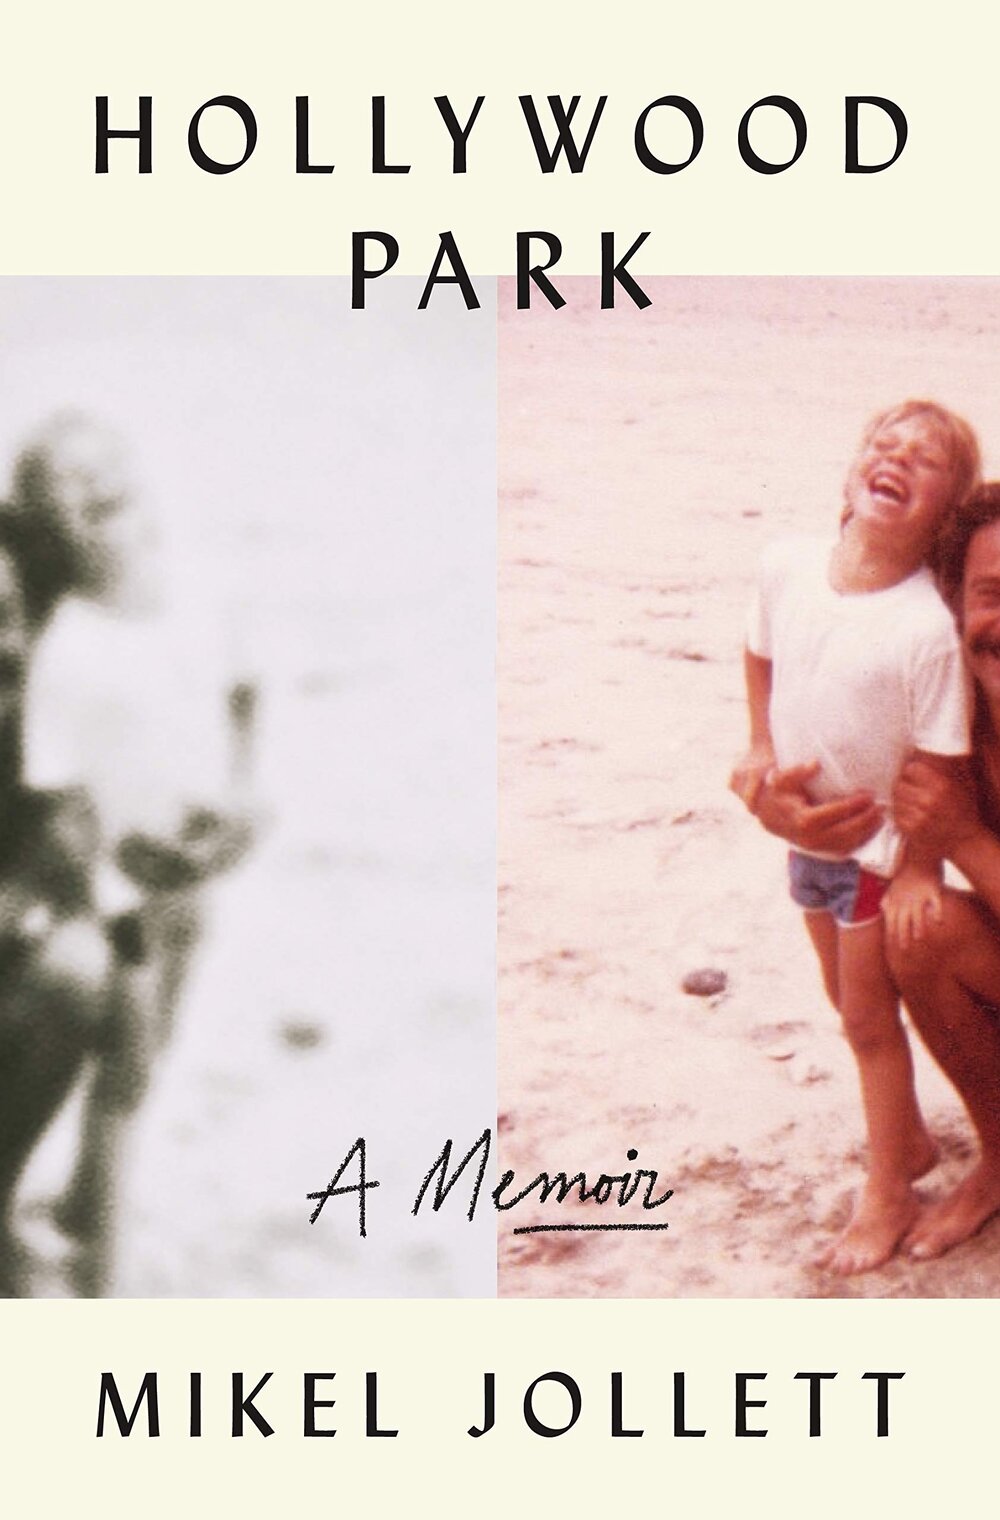 Hollywood Park A Memoir by Mikel Jollett